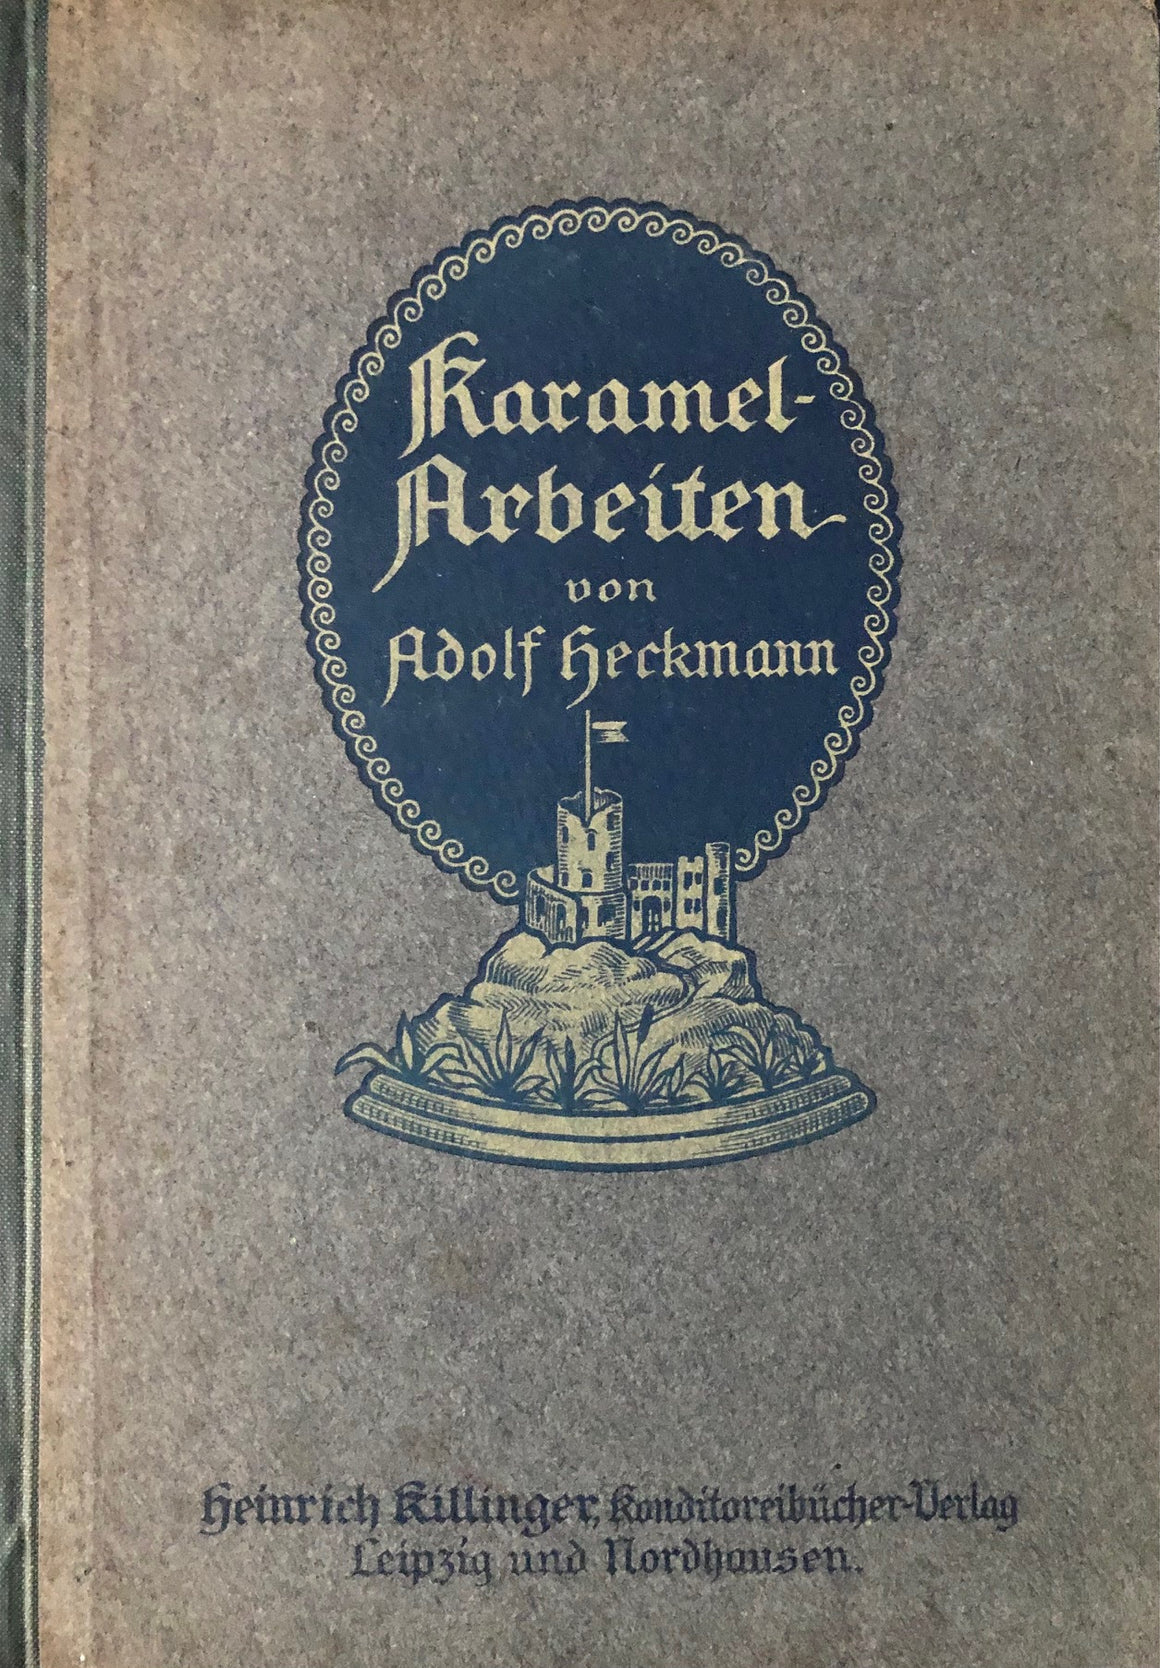 (*NEW ARRIVAL*) (Confectionery) Adolf Heckmann. Karamel-Arbeiten